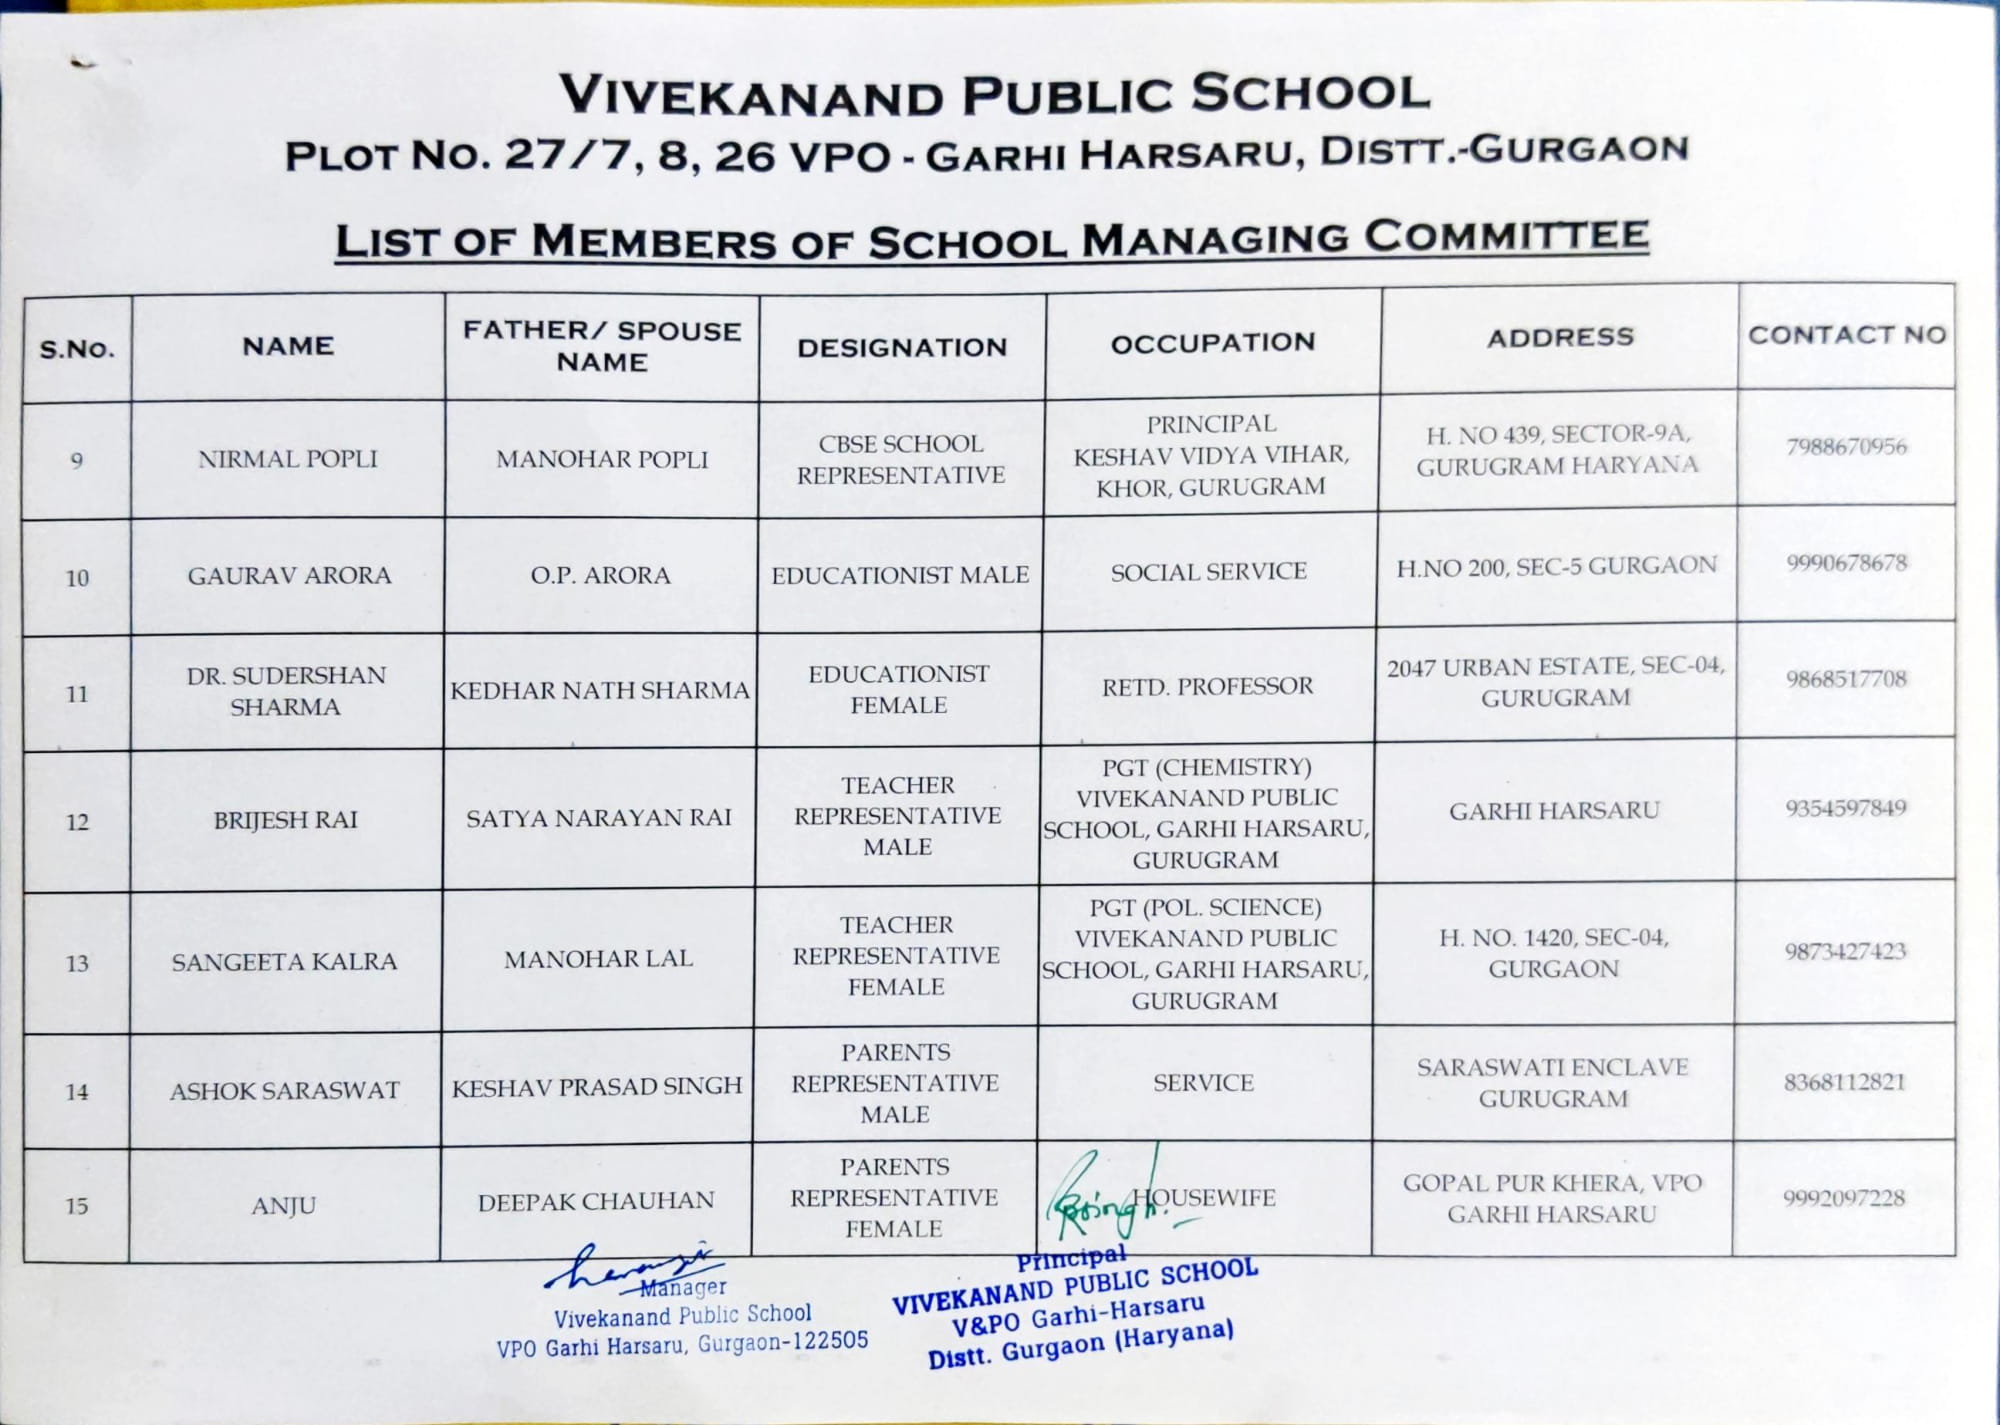 Vivekanand Public School Managing Committee